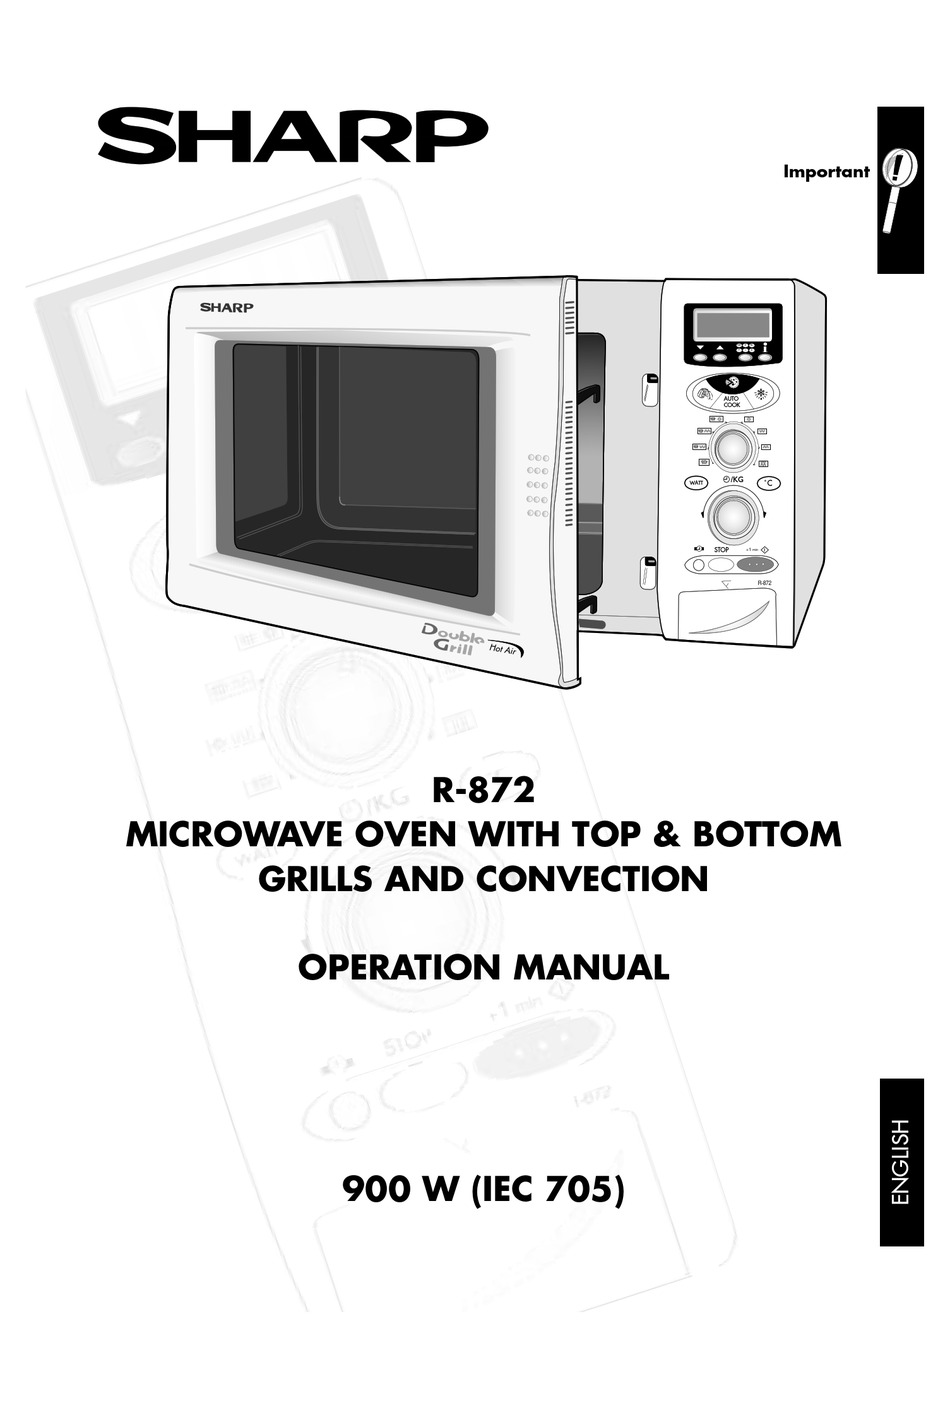 SHARP R-872 OPERATION Pdf Download | ManualsLib